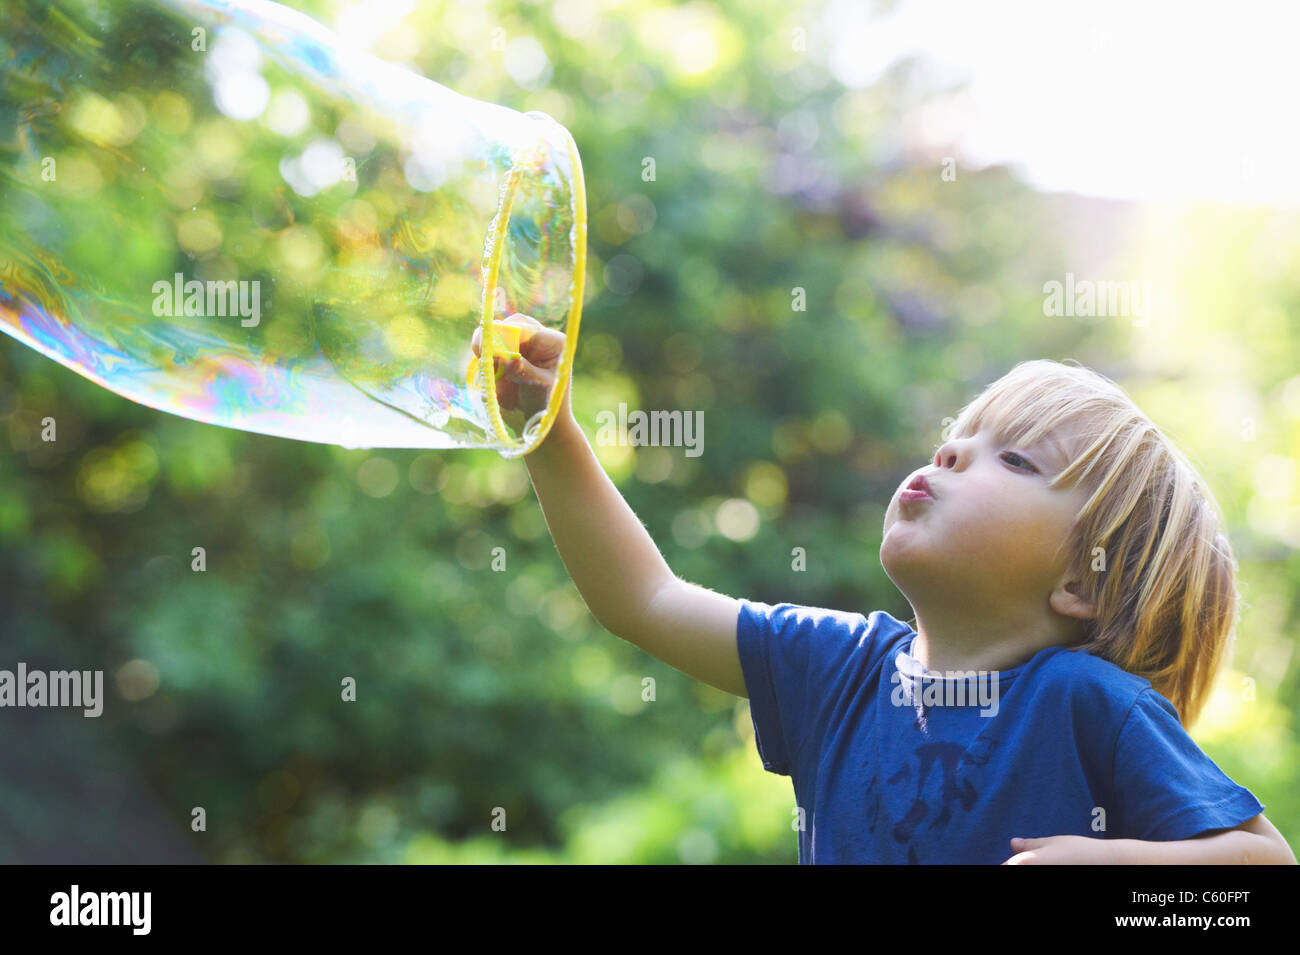 Boy blowing oversized bubble in backyard Stock Photo